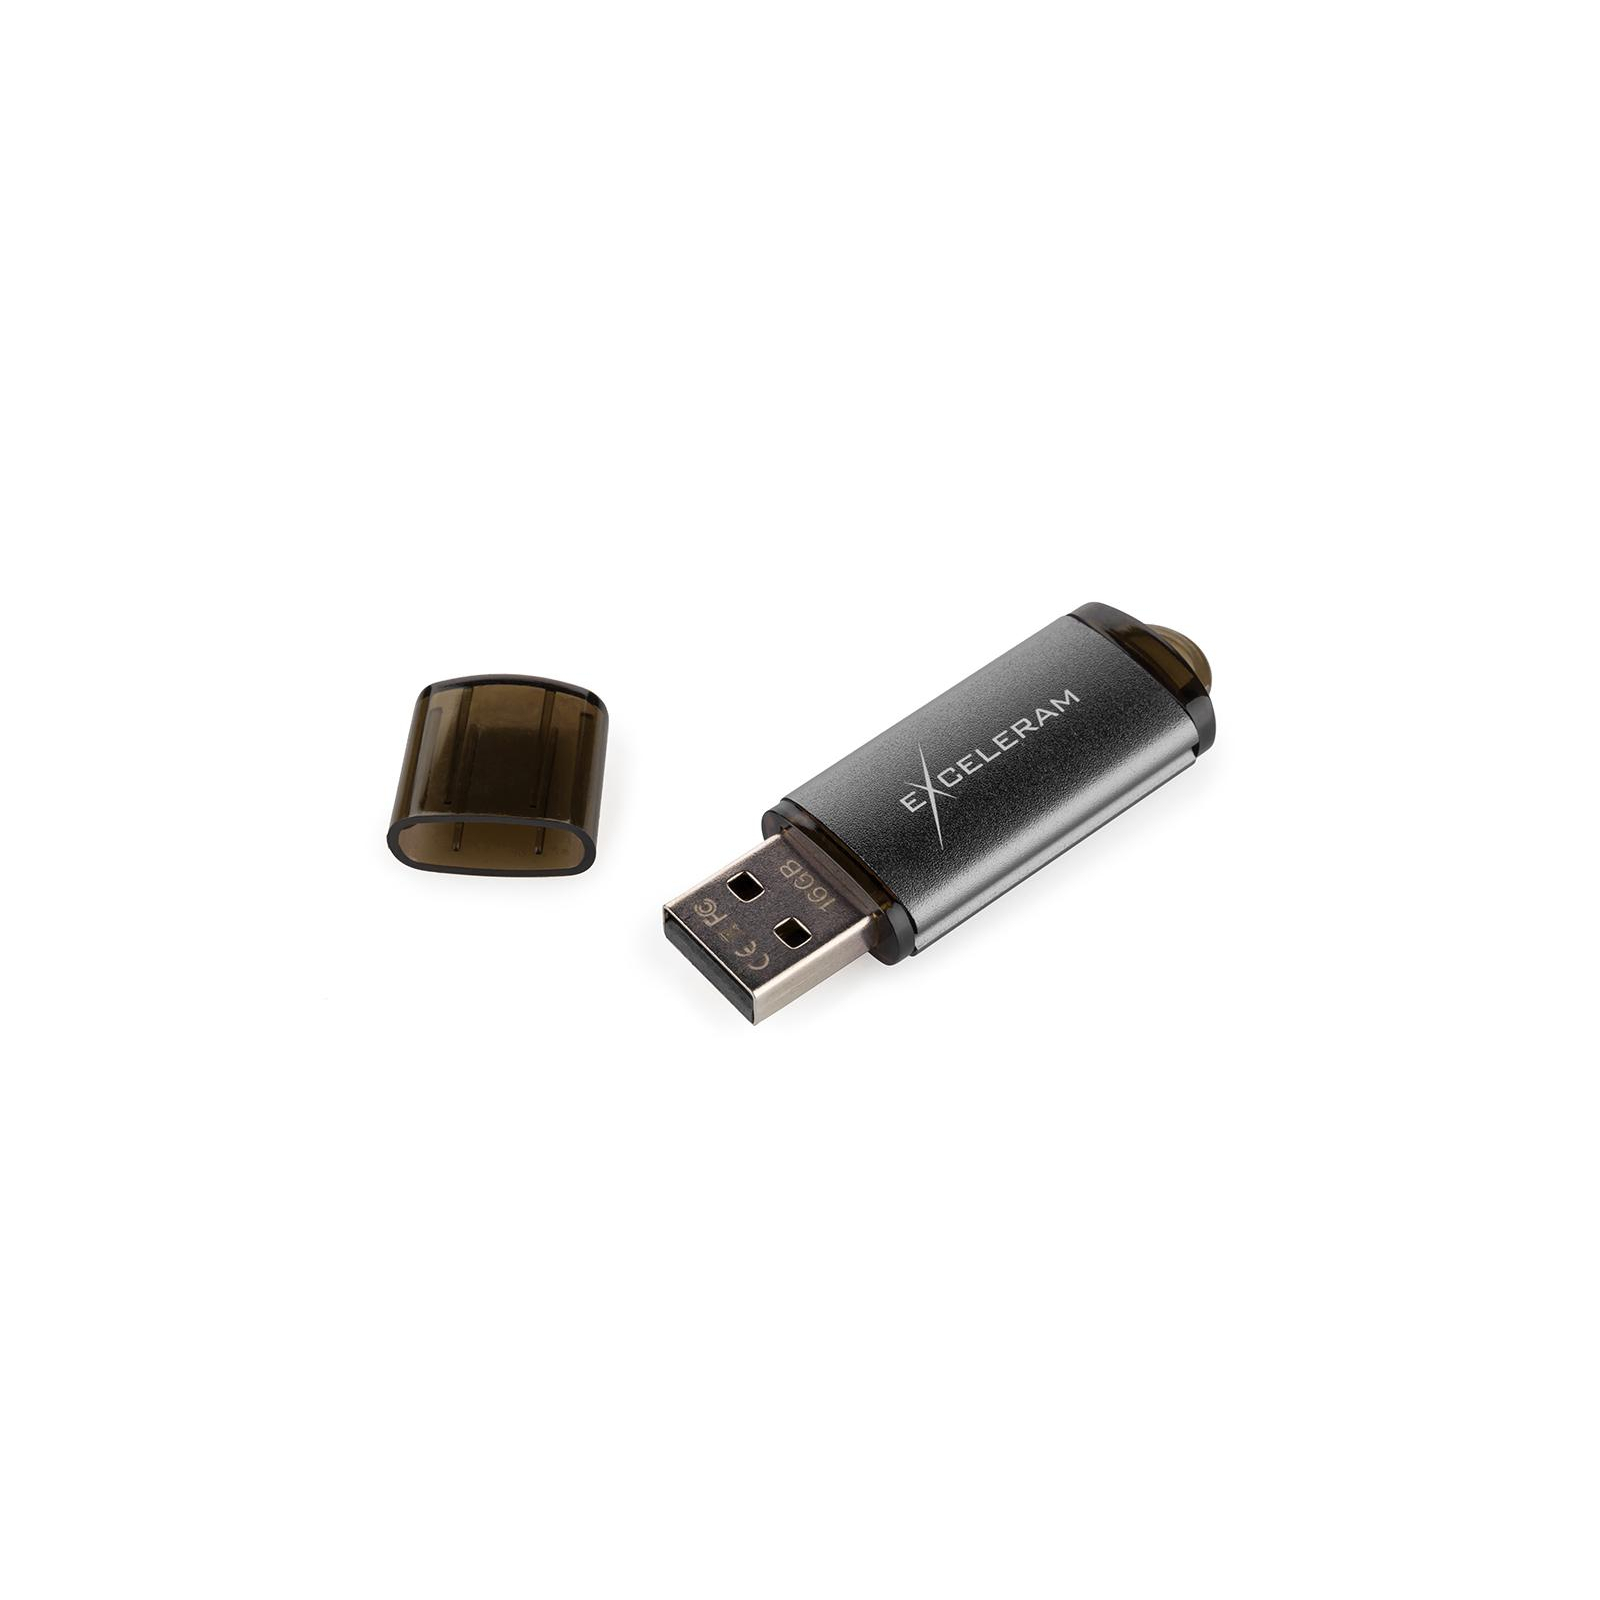 USB флеш накопитель eXceleram 16GB A3 Series Black USB 2.0 (EXA3U2B16) изображение 6